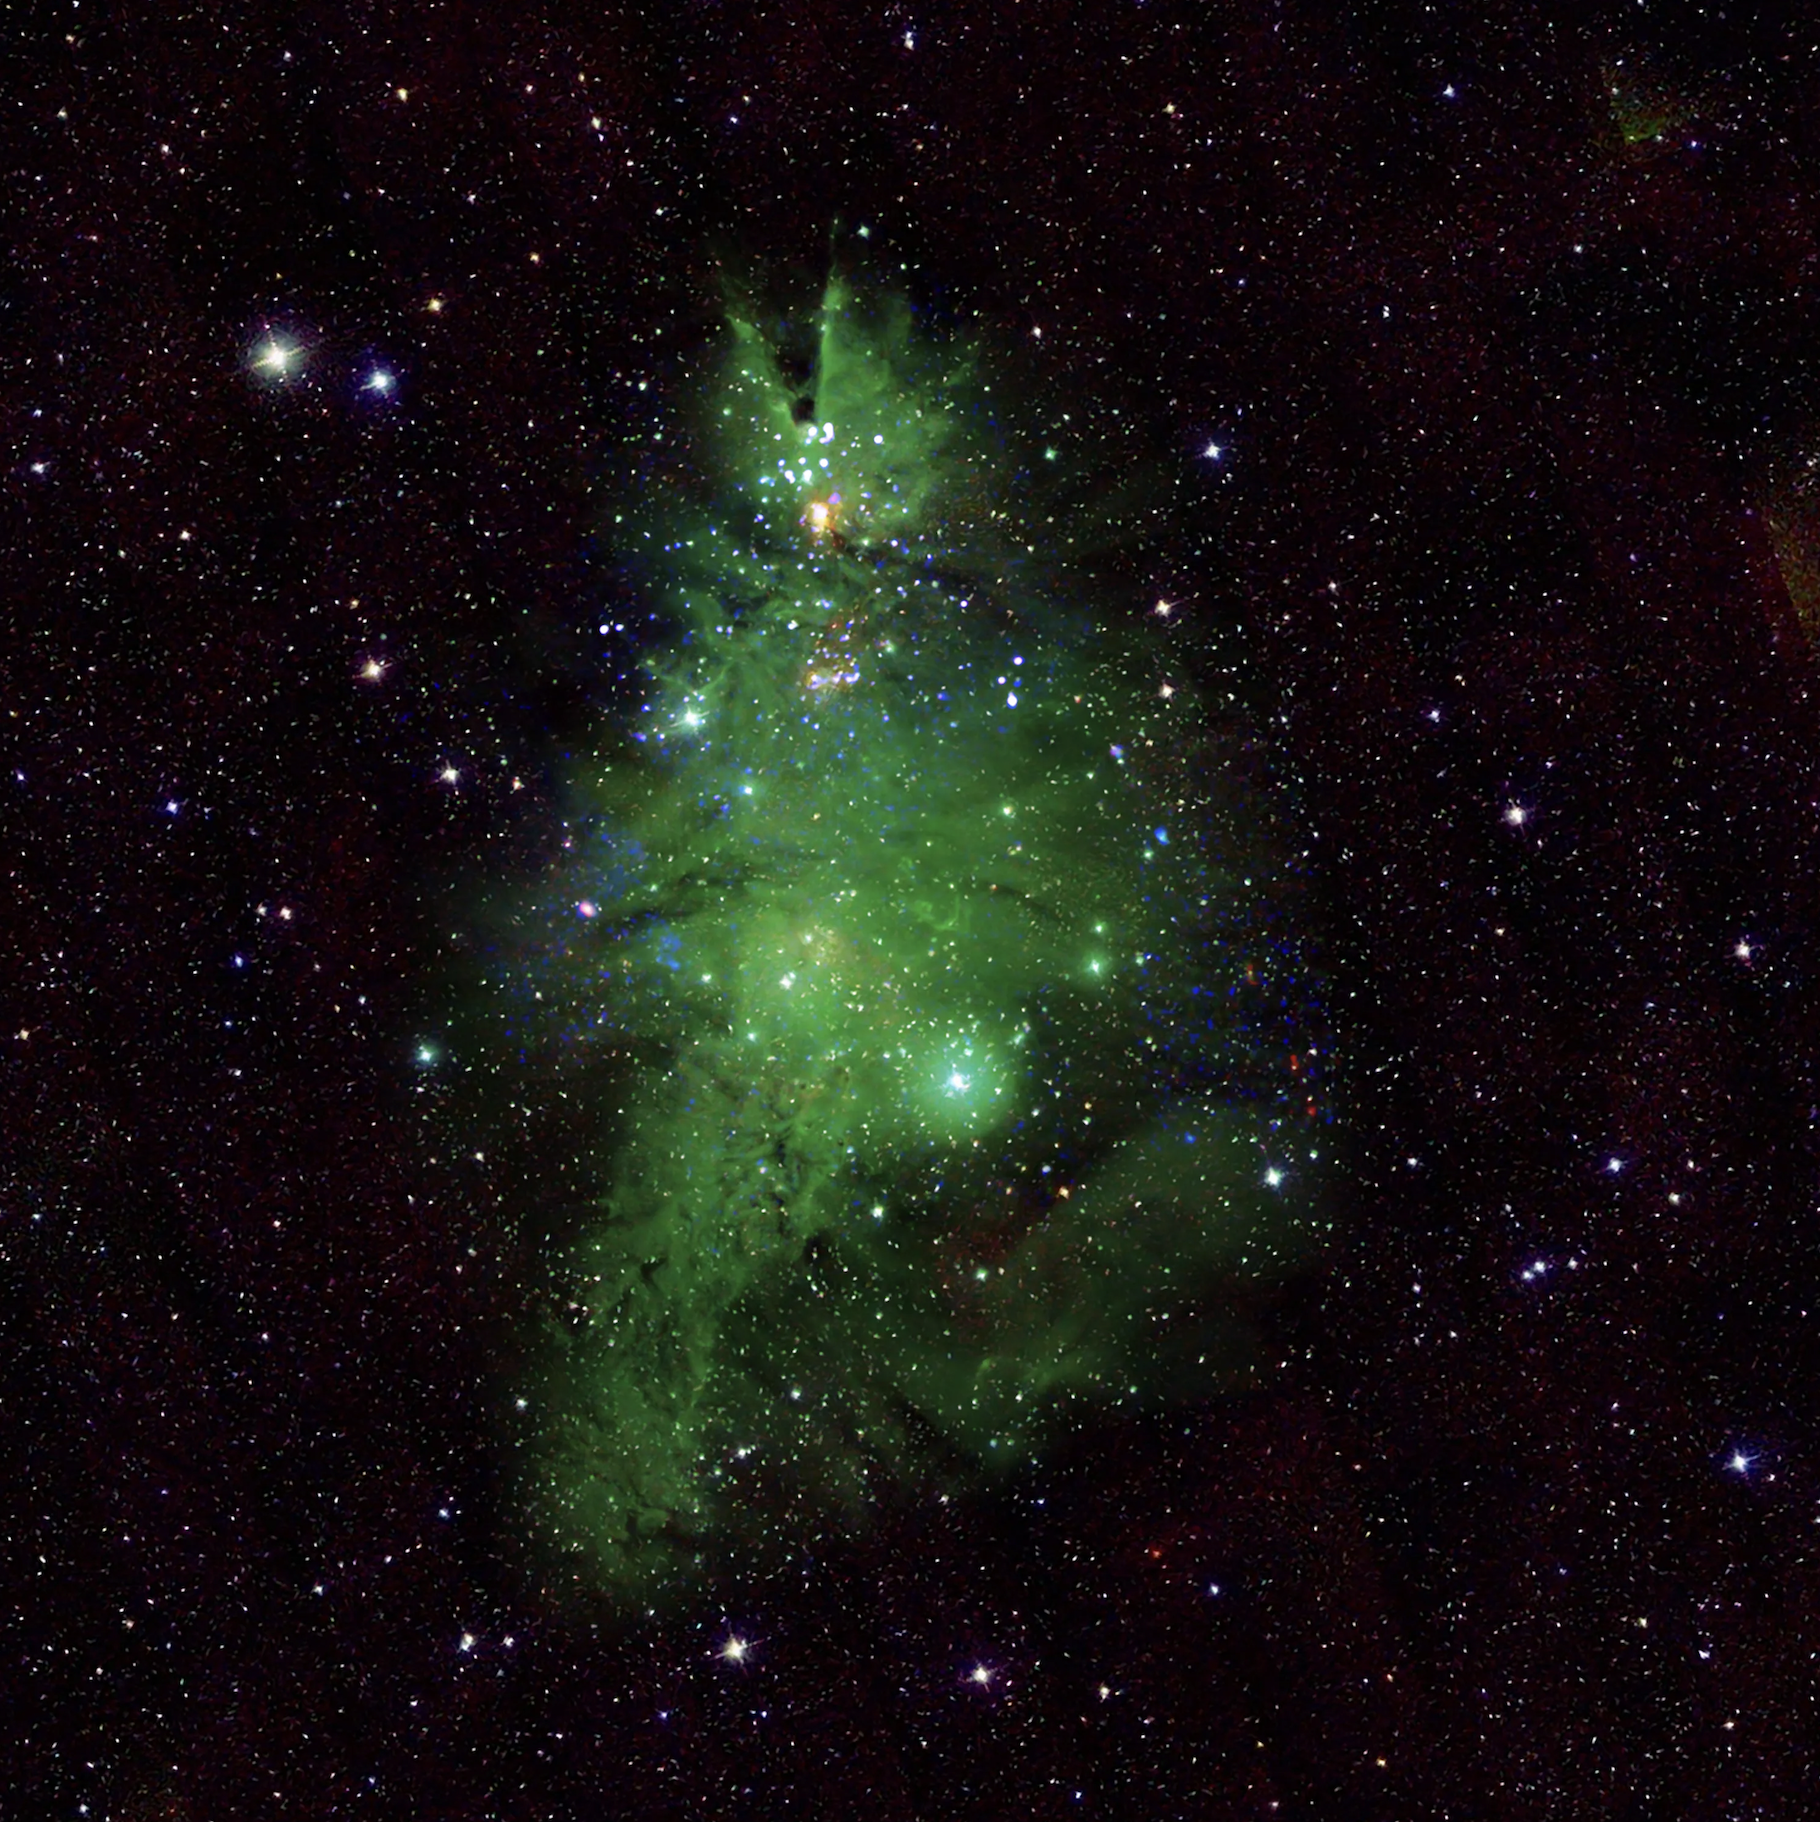 À l’approche de Noël, la Nasa nous offre une vue sur un merveilleux sapin cosmique illuminé. © X-ray : Nasa/CXC/SAO ; Optical : T.A. Rector (NRAO/AUI/NSF and NOIRLab/NSF/AURA) and B.A. Wolpa (NOIRLab/NSF/AURA); Infrared : Nasa/NSF/IPAC/CalTech/Univ. of Massachusetts ; Image Processing : Nasa/CXC/SAO/L. Frattare &amp; J.Major